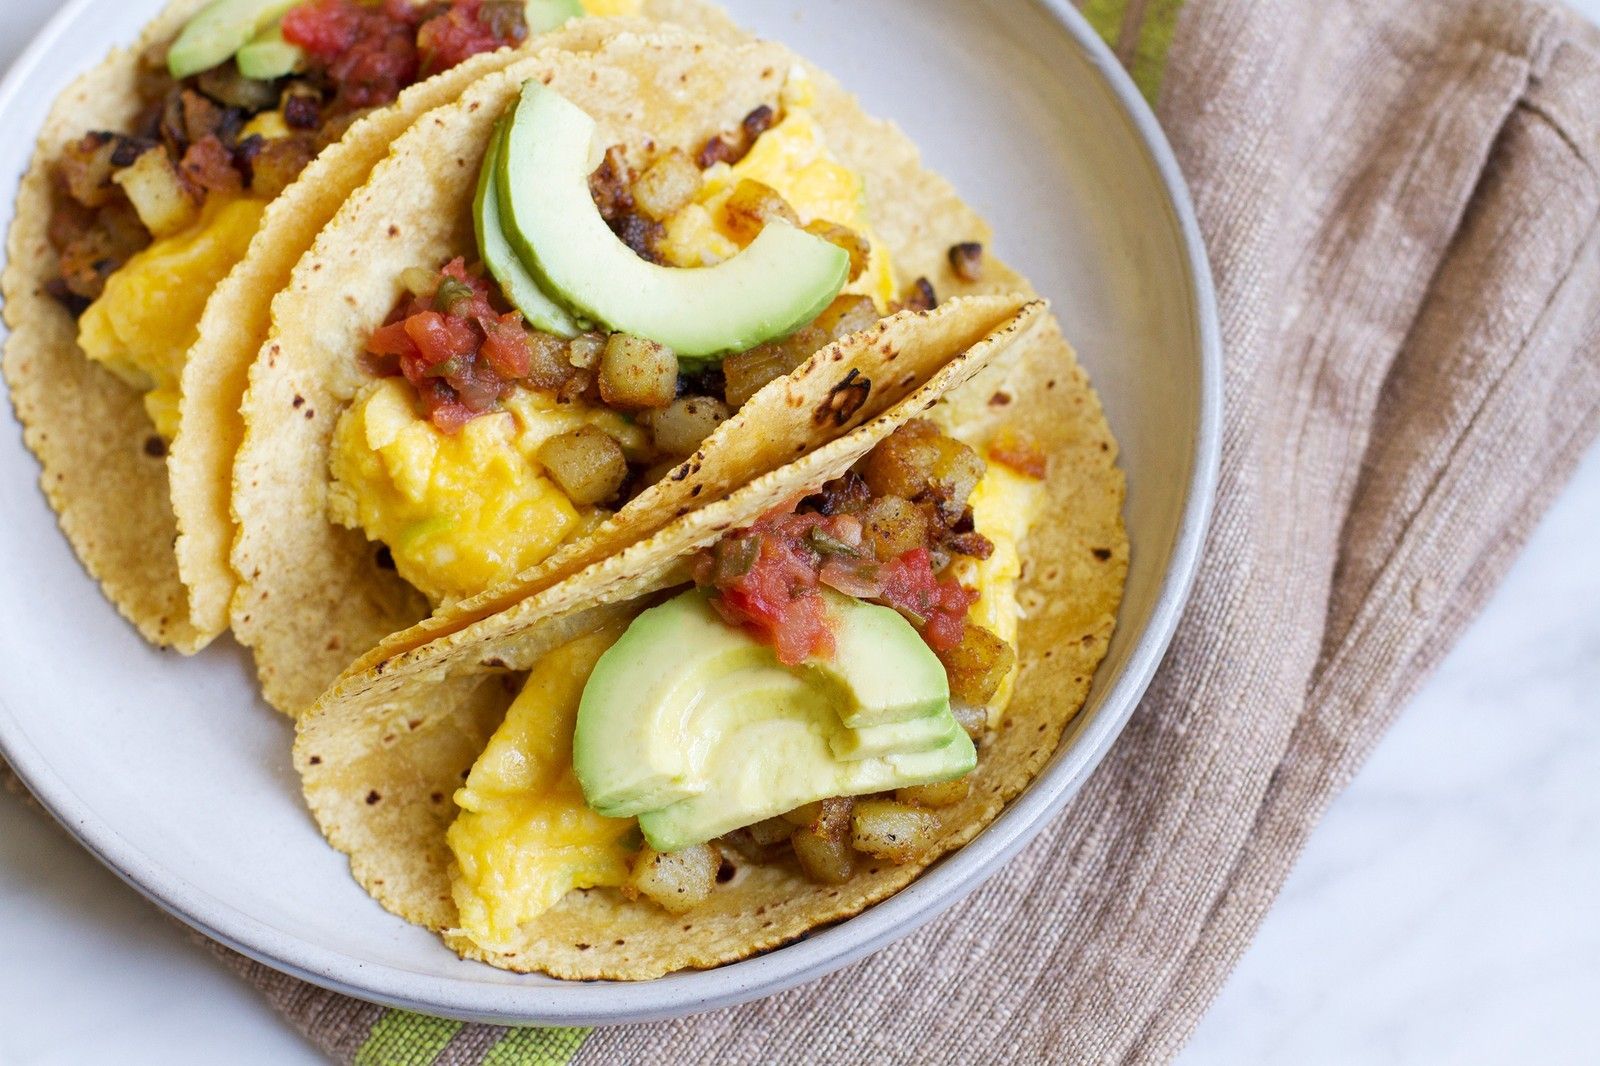  photo breakfast tacos.jpg